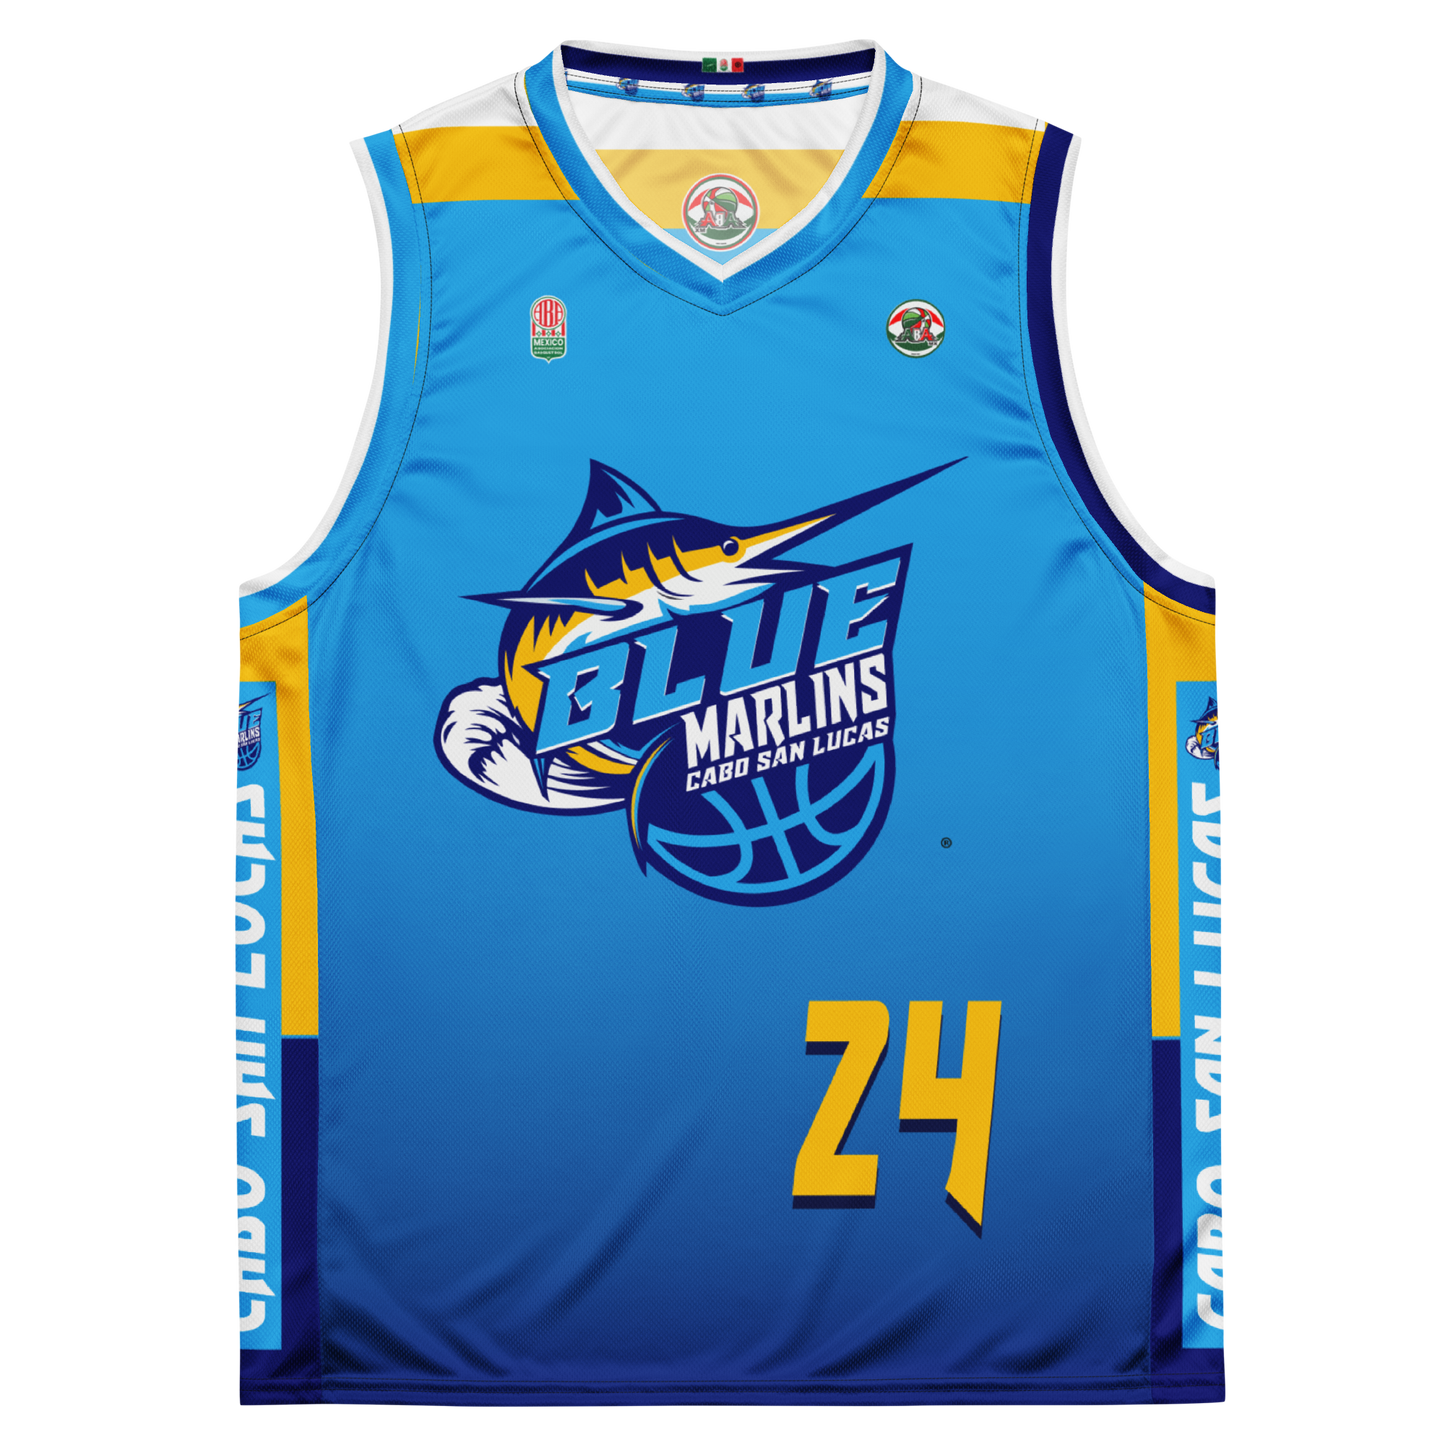 Cabo San Lucas Blue Marlins ABA Team Jersey: